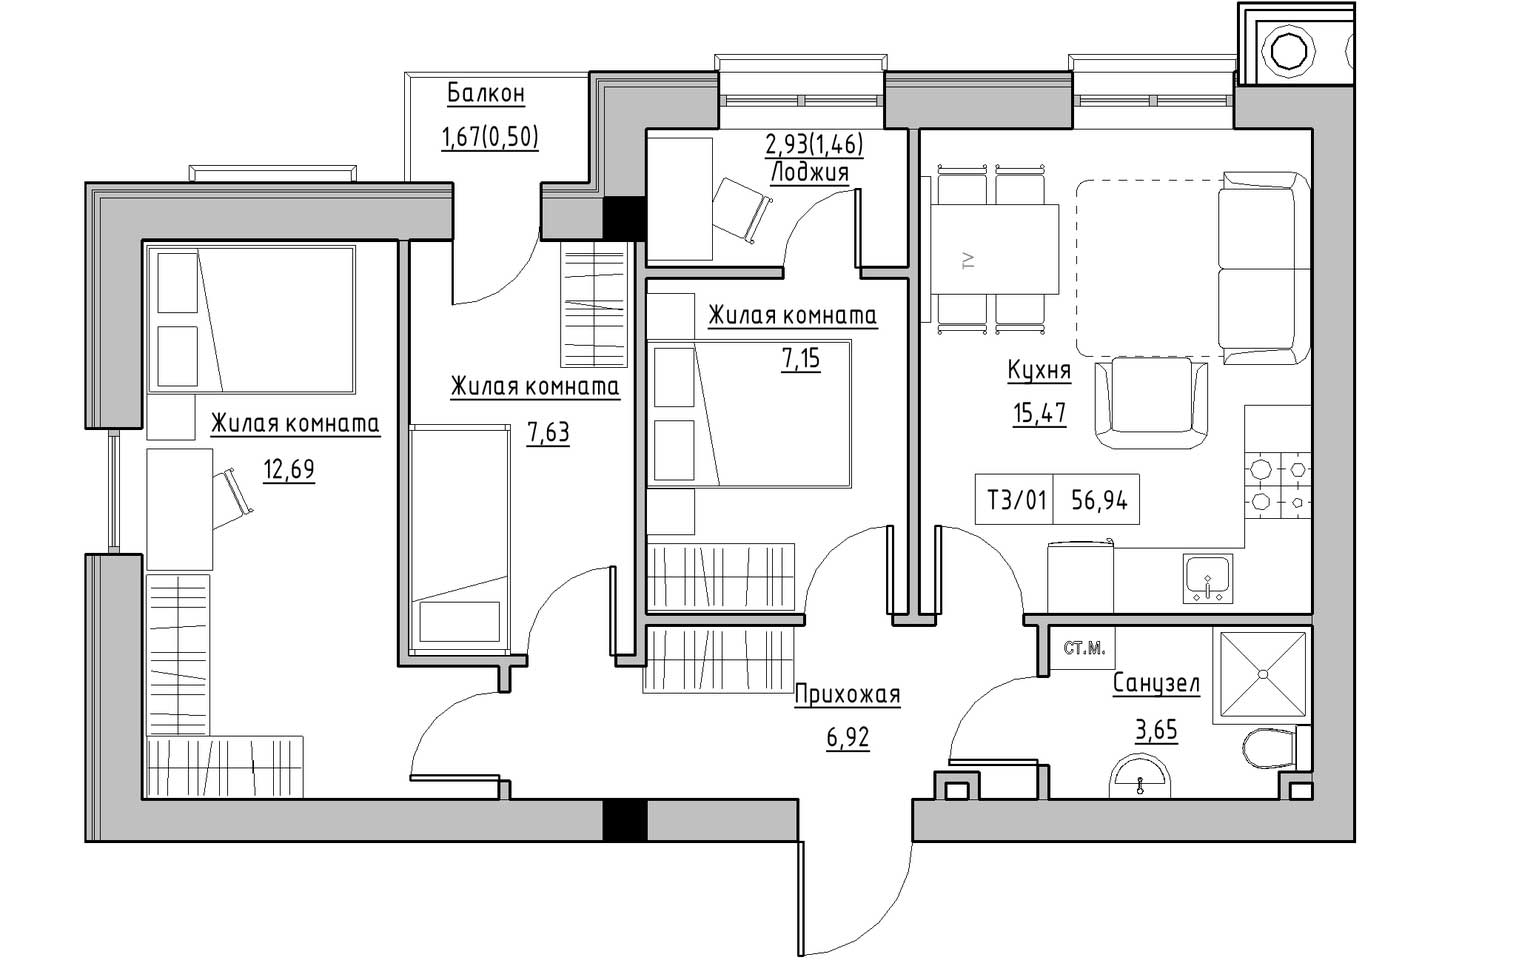 Planning 3-rm flats area 56.94m2, KS-009-04/0006.